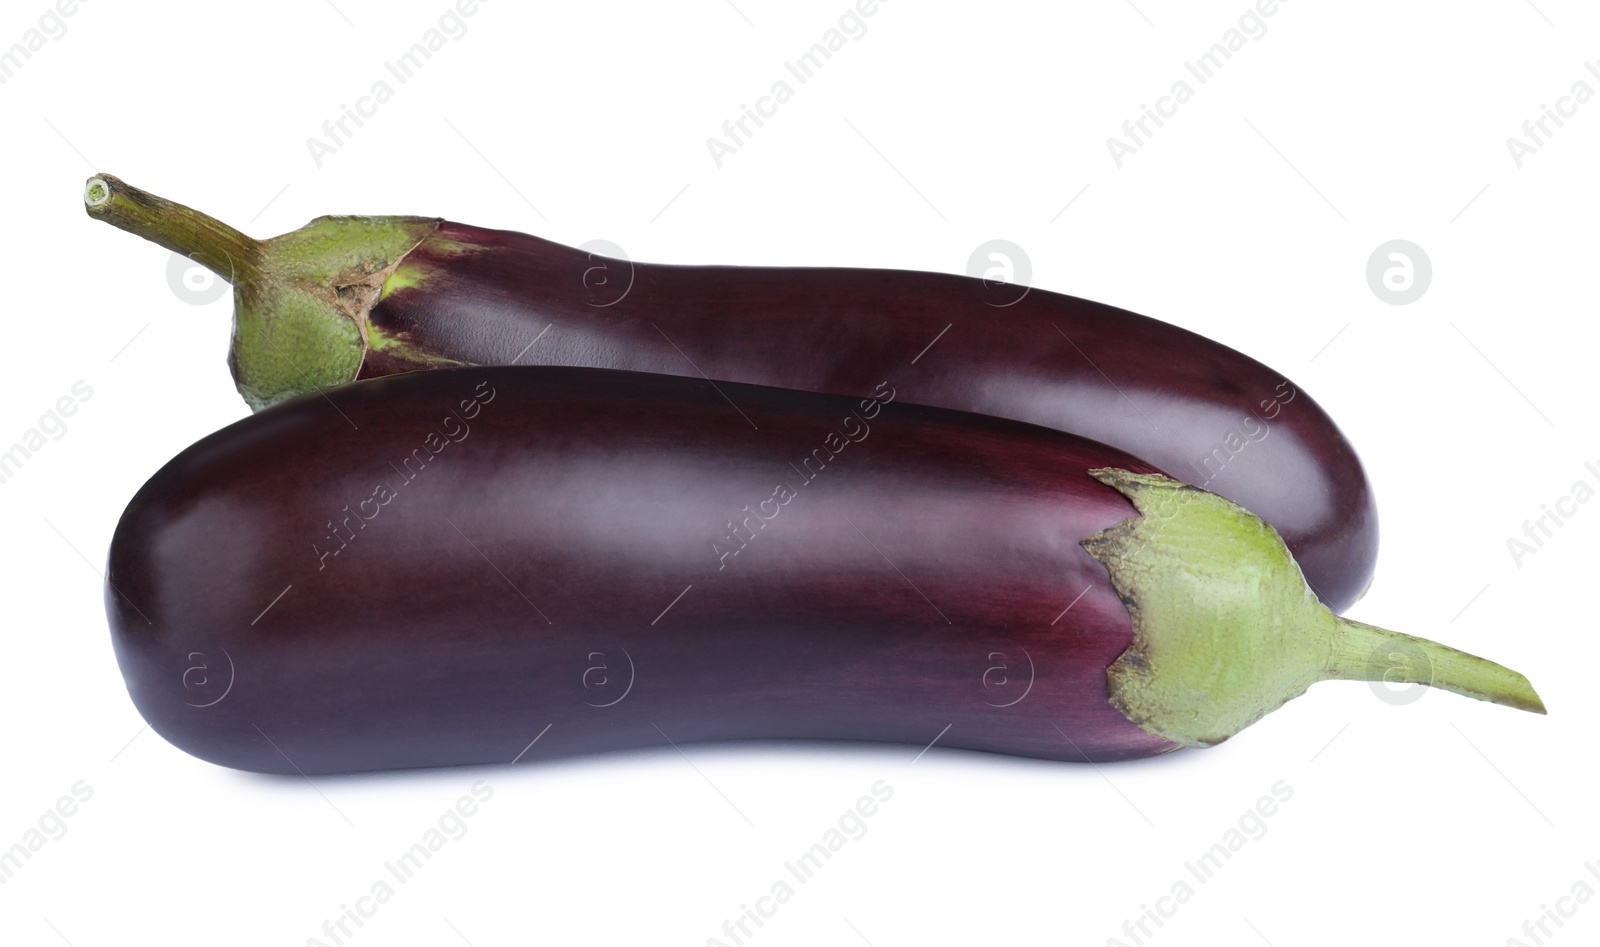 Photo of Organic fresh ripe eggplants on white background